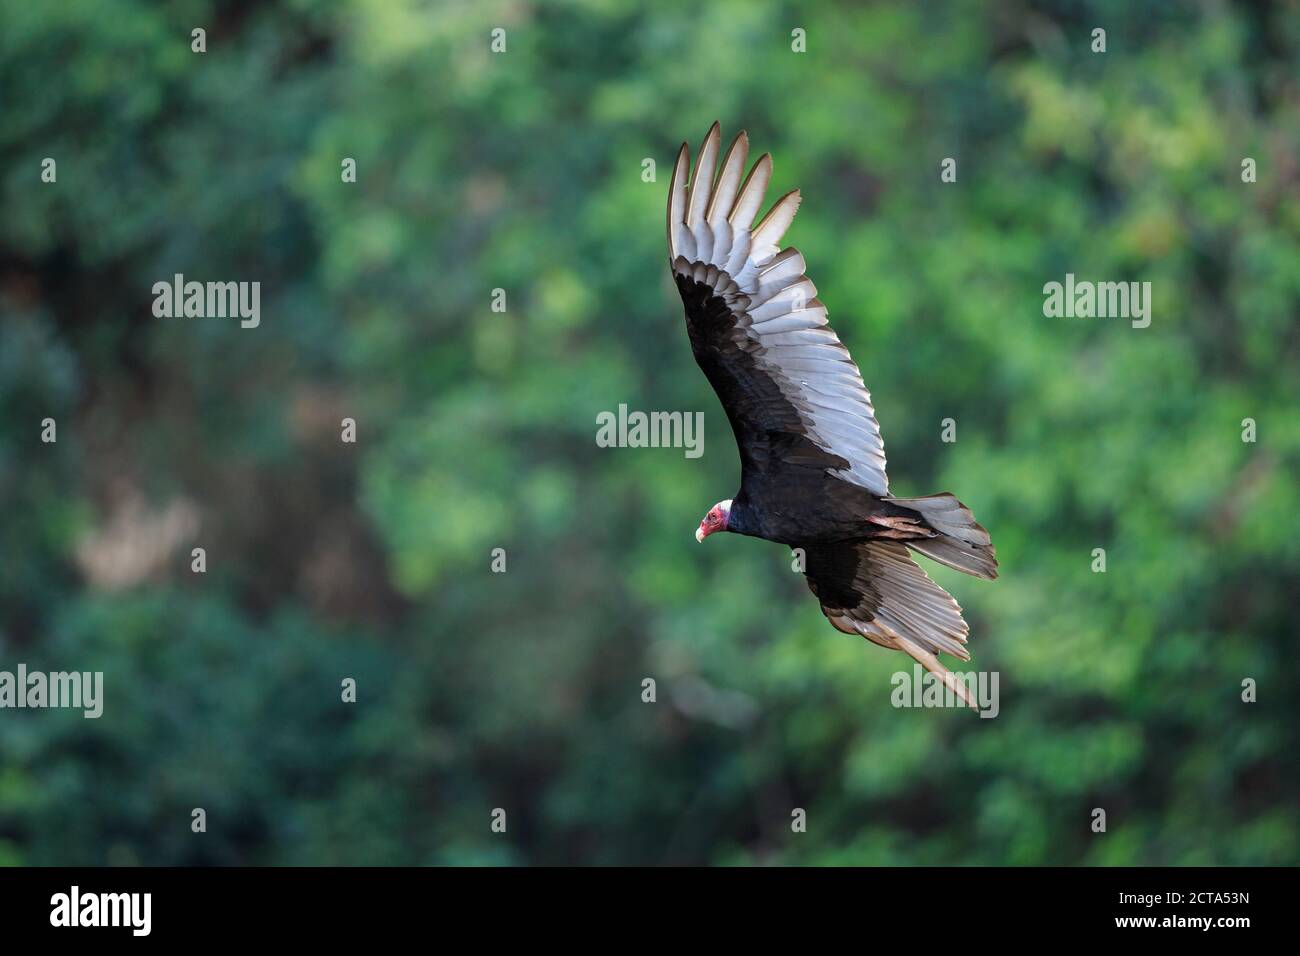 South America, Brasilia, Mato Grosso do Sul, Pantanal, Turkey Vulture, Cathartes aura, flying Stock Photo